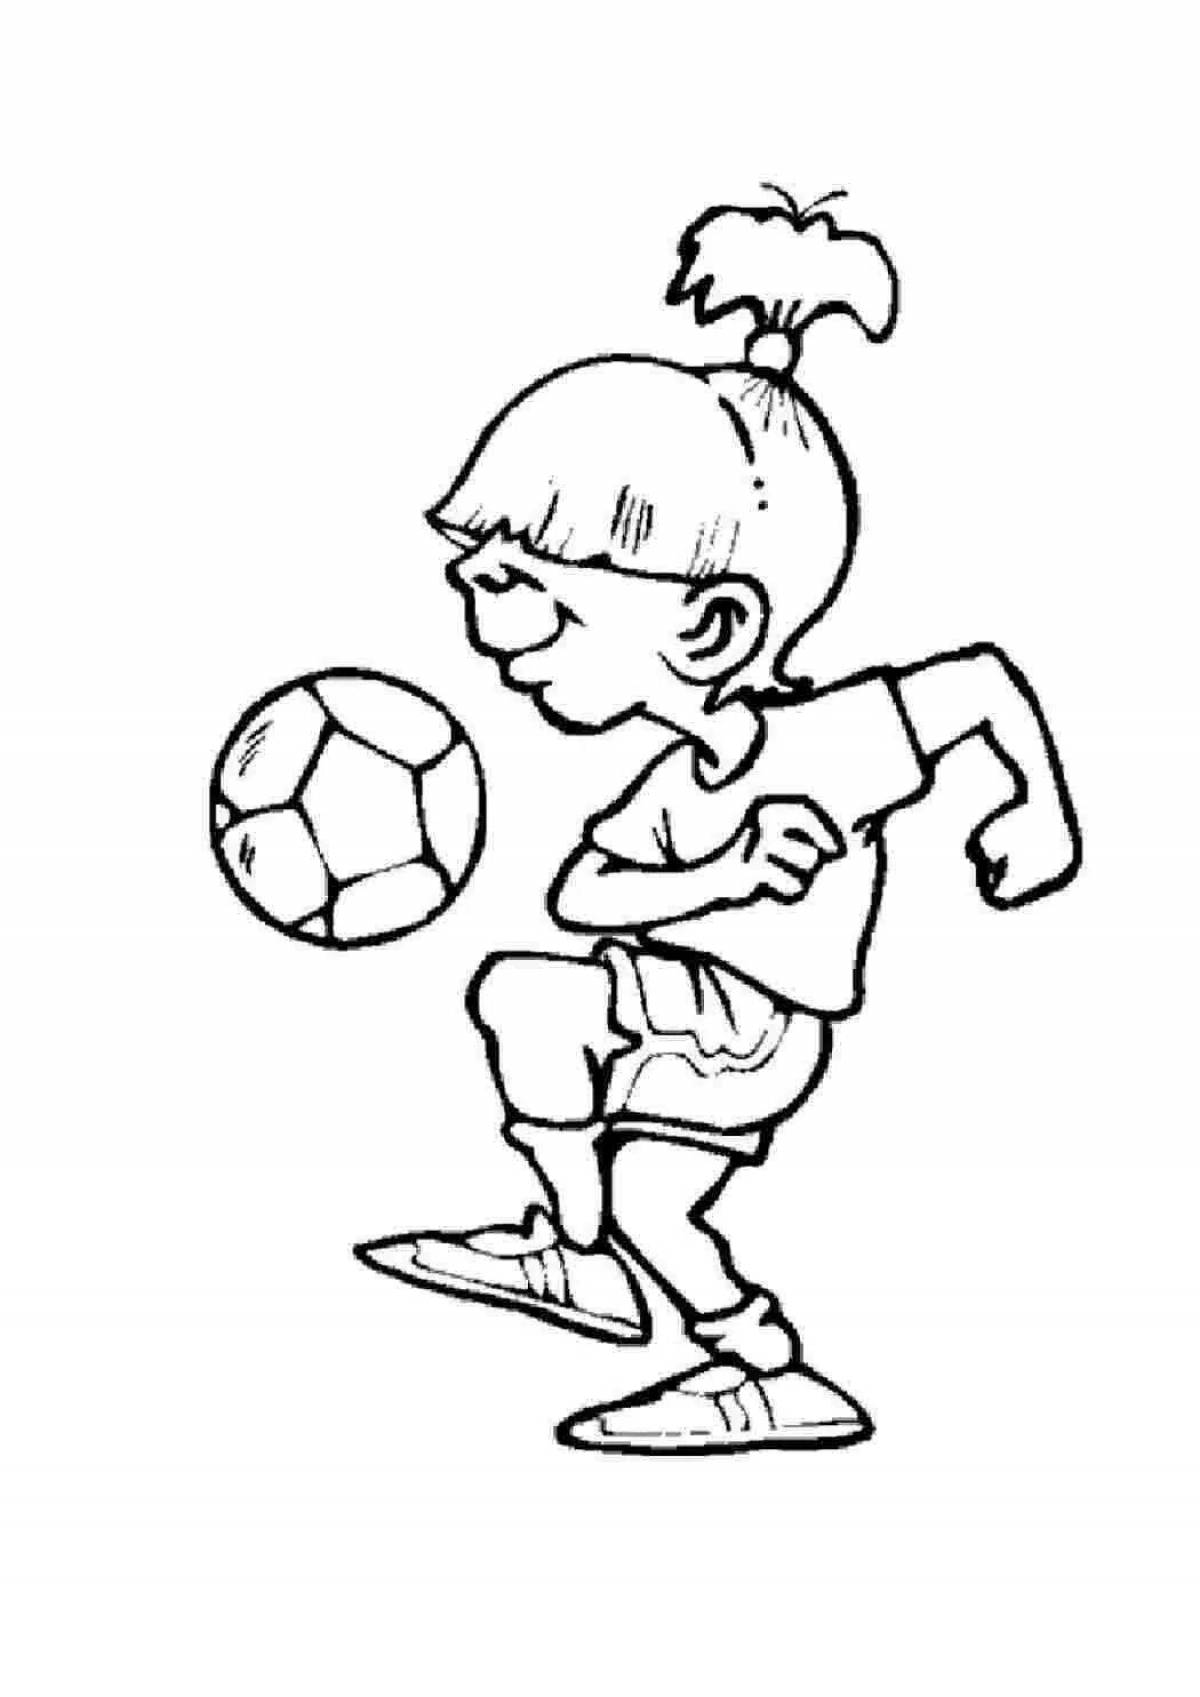 Coloring page shining boy playing football